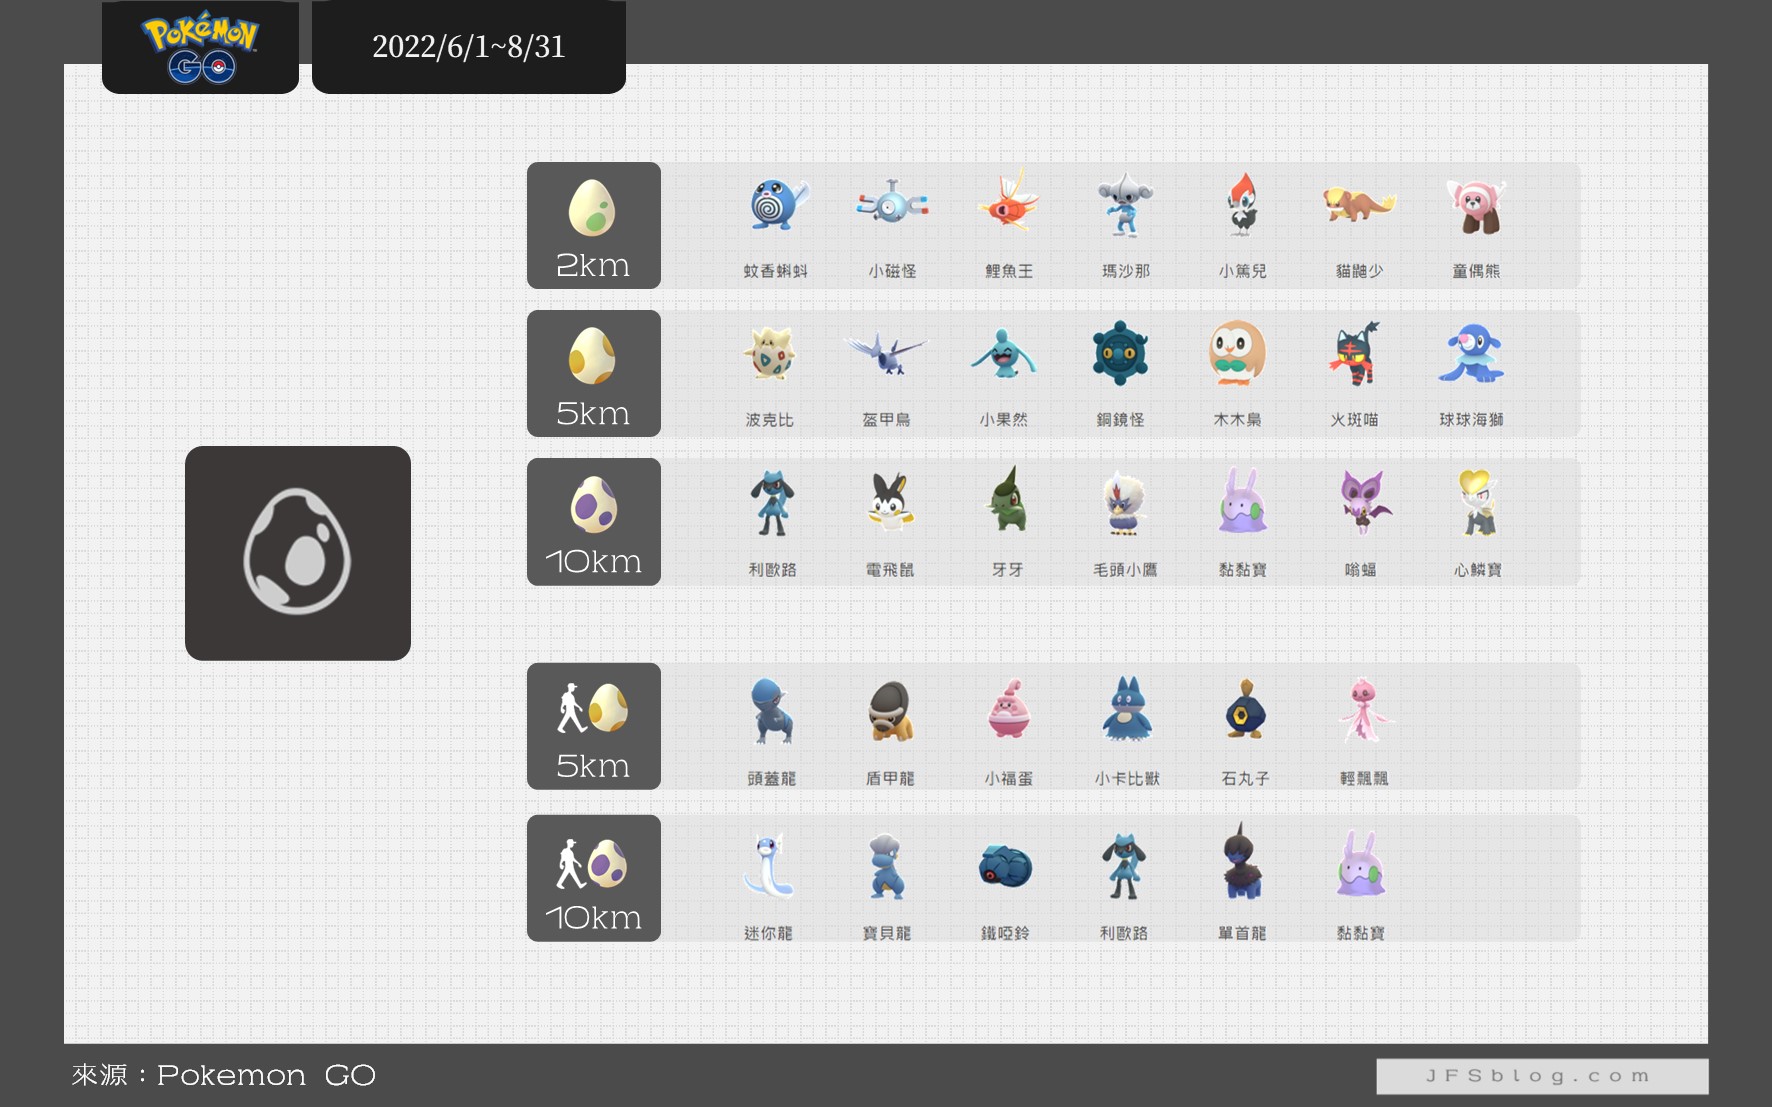 【Pokemon GO】GO的季節：XL糖果取得機會增加！特殊交換增加一次！